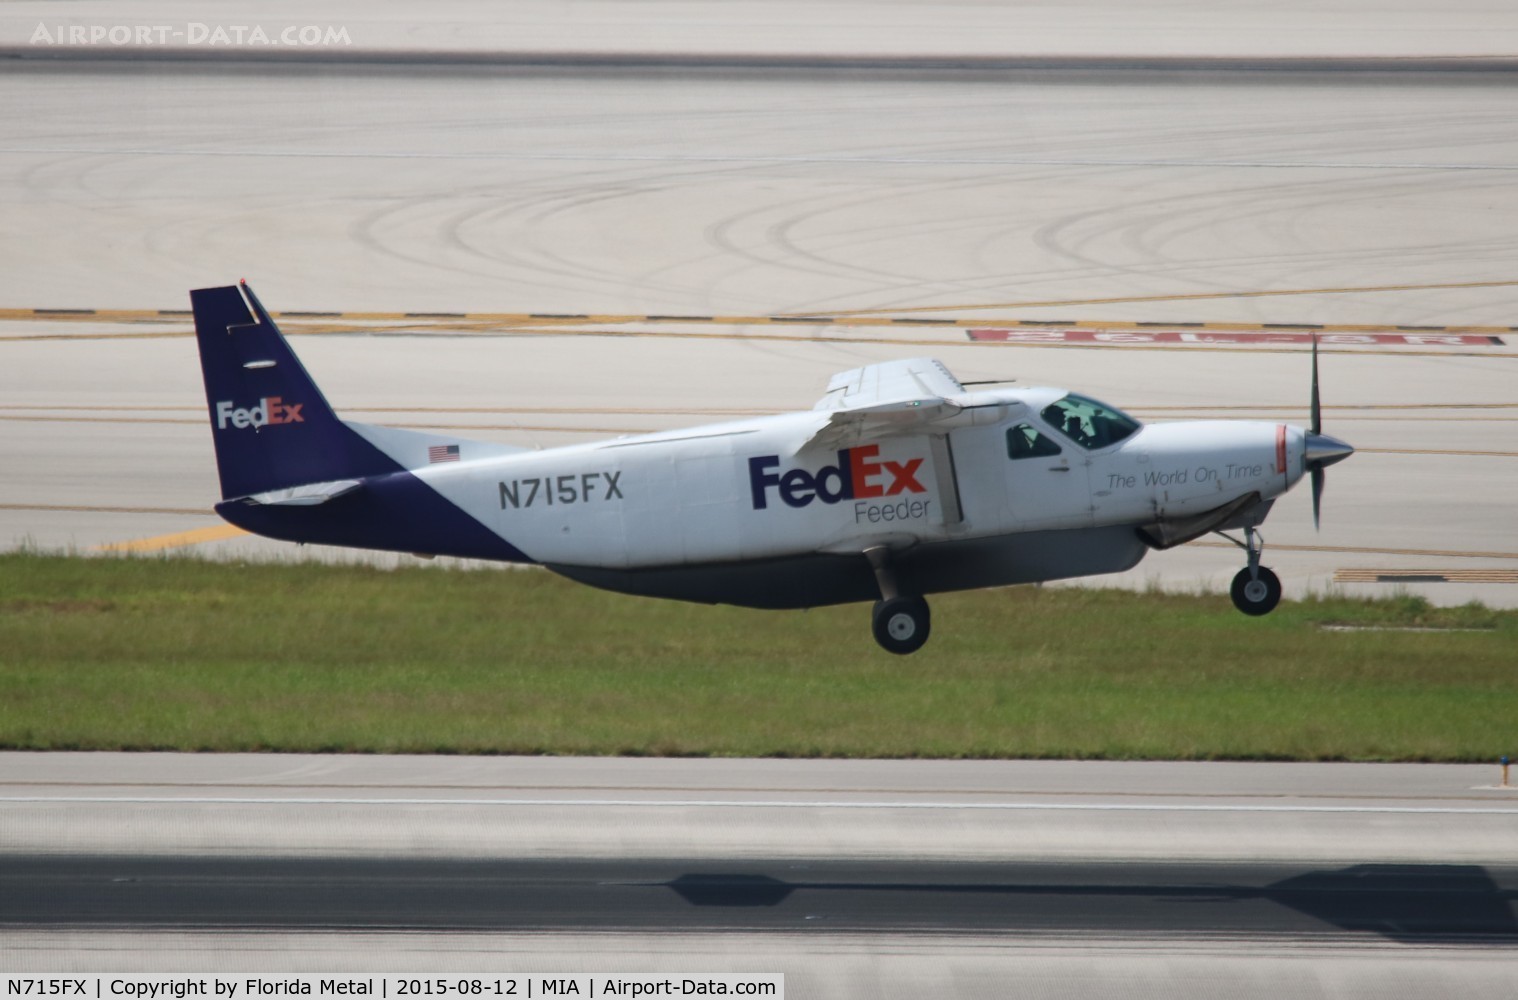 N715FX, 1995 Cessna 208B Super Cargomaster C/N 208B0440, Fed Ex